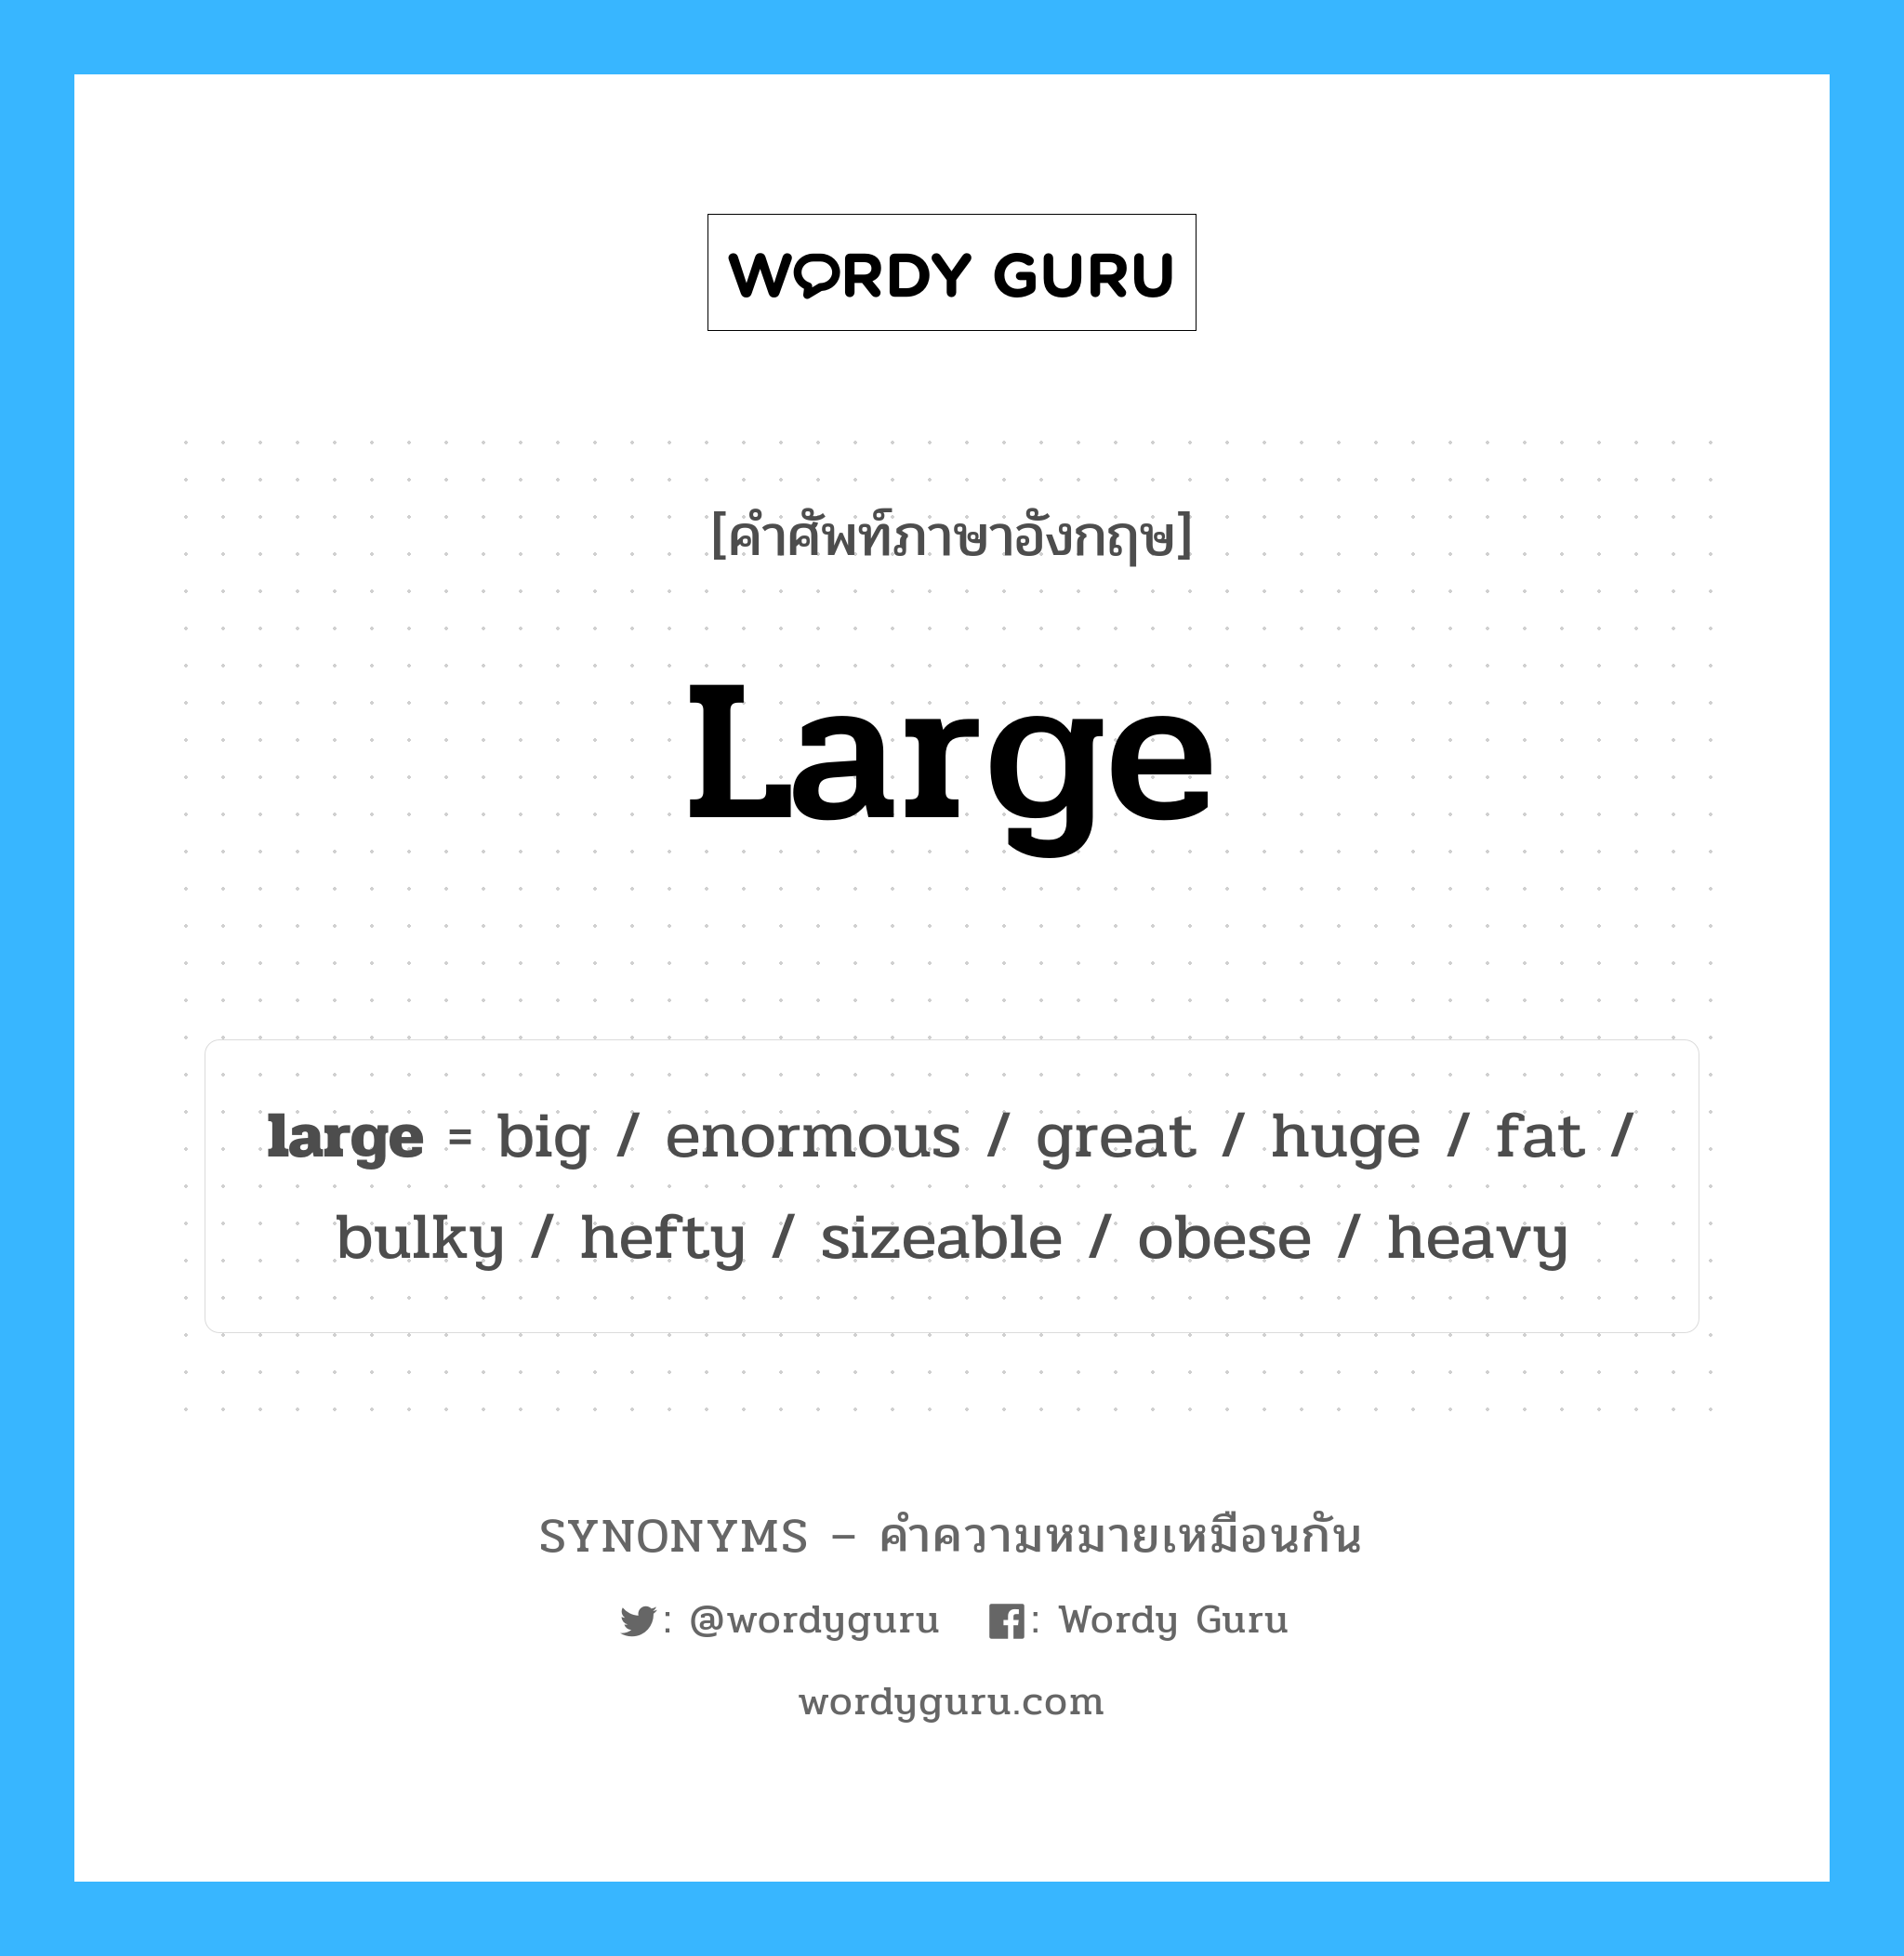 enormous เป็นหนึ่งใน great และมีคำอื่น ๆ อีกดังนี้, คำศัพท์ภาษาอังกฤษ enormous ความหมายคล้ายกันกับ large แปลว่า มหาศาล หมวด large